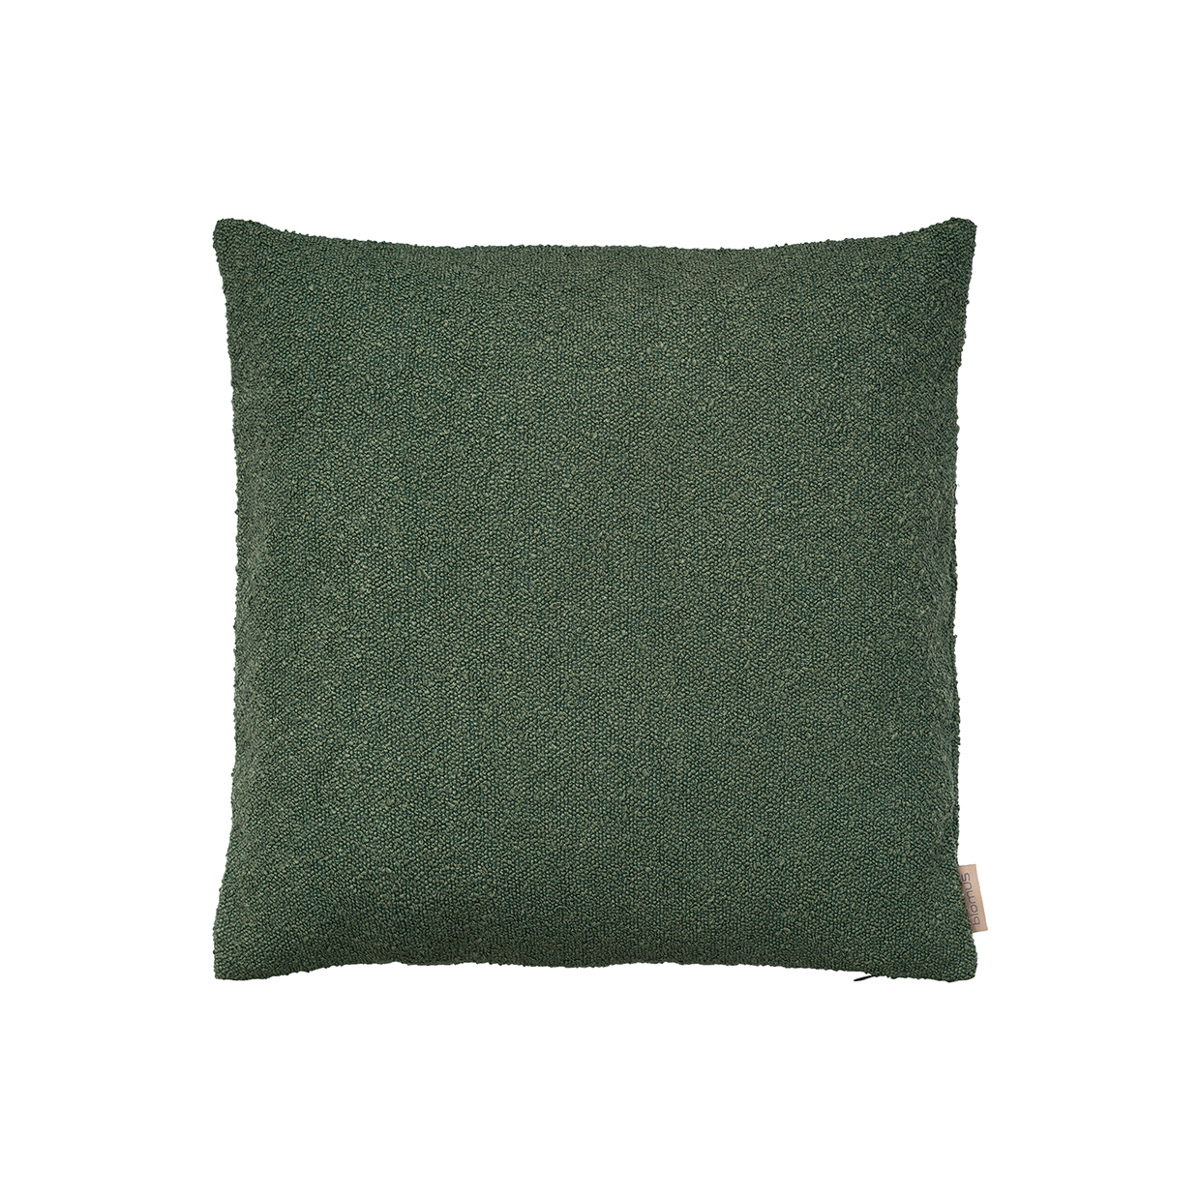 Kissenbezug -BOUCLE- Duck Green 50 x 50 cm. Material: 90% Polyester, 10% Acryl. Von Blomus.